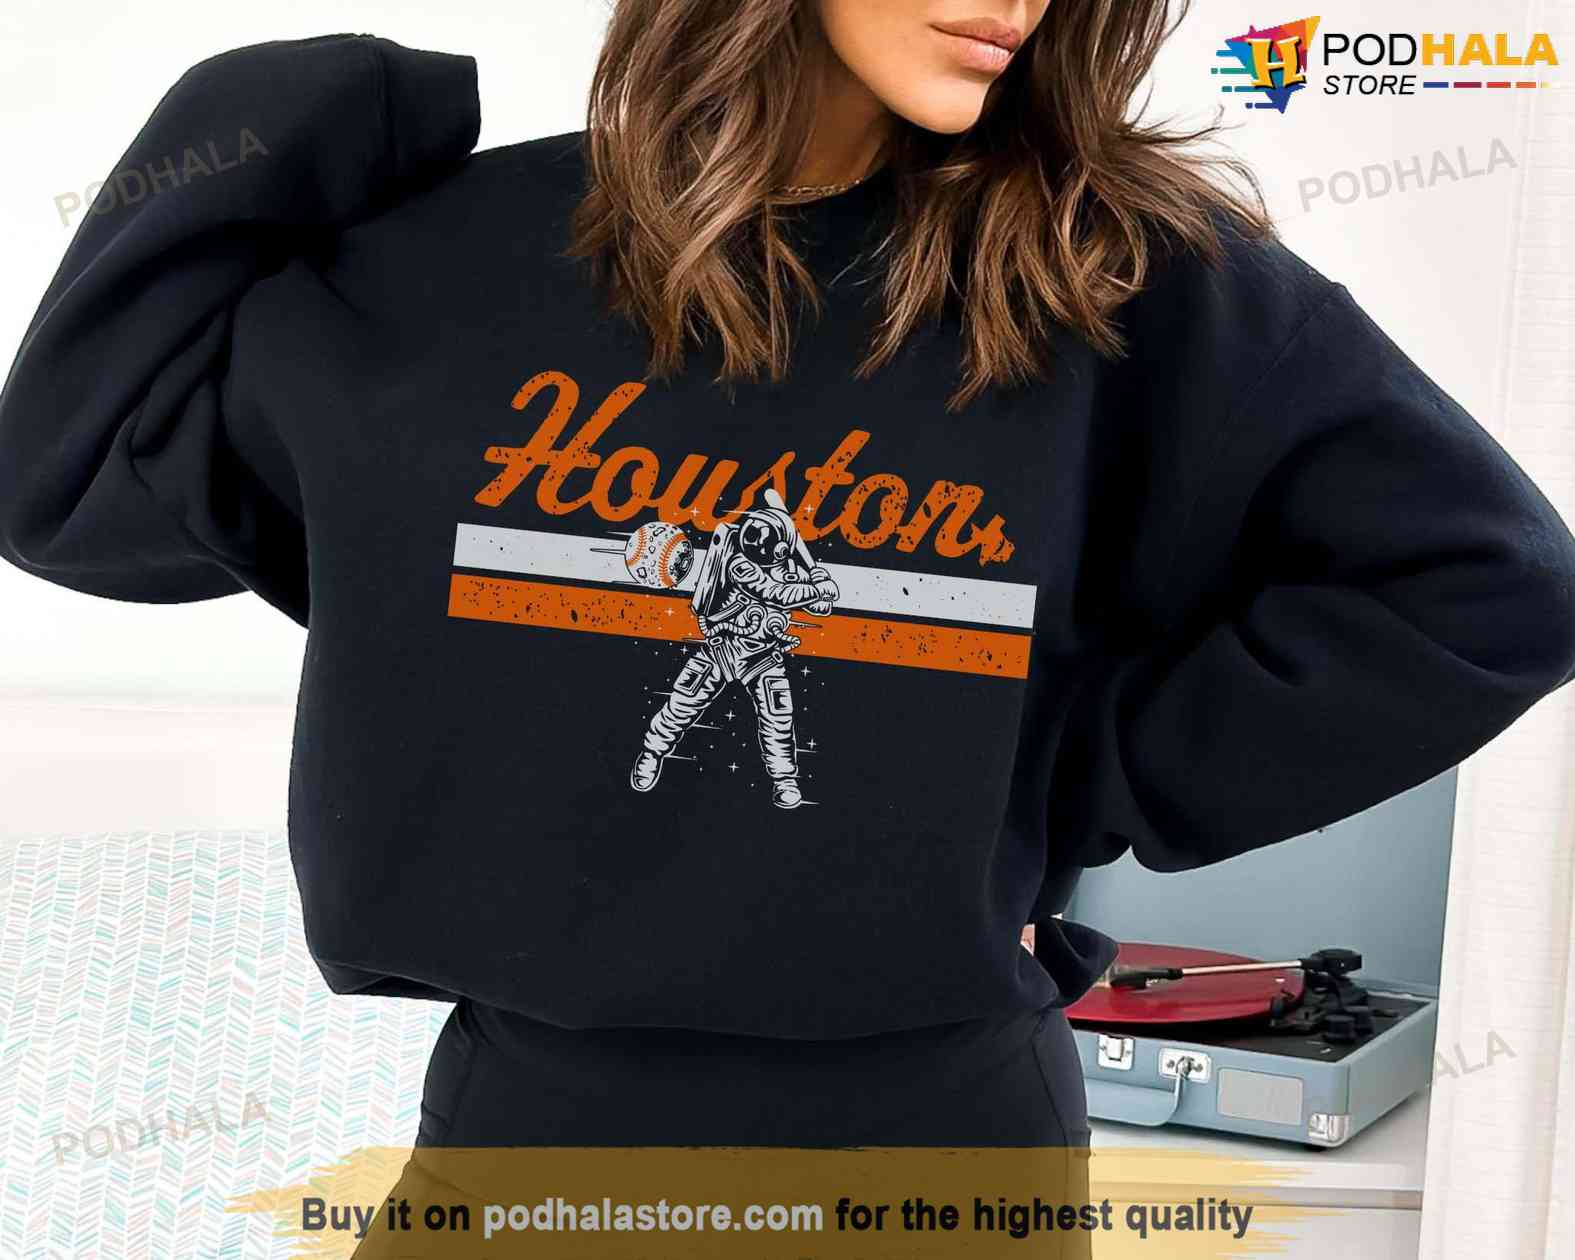 Houston Astros Skyline 2022 World Series Champions 2017-2022 shirt, hoodie,  sweater, long sleeve and tank top